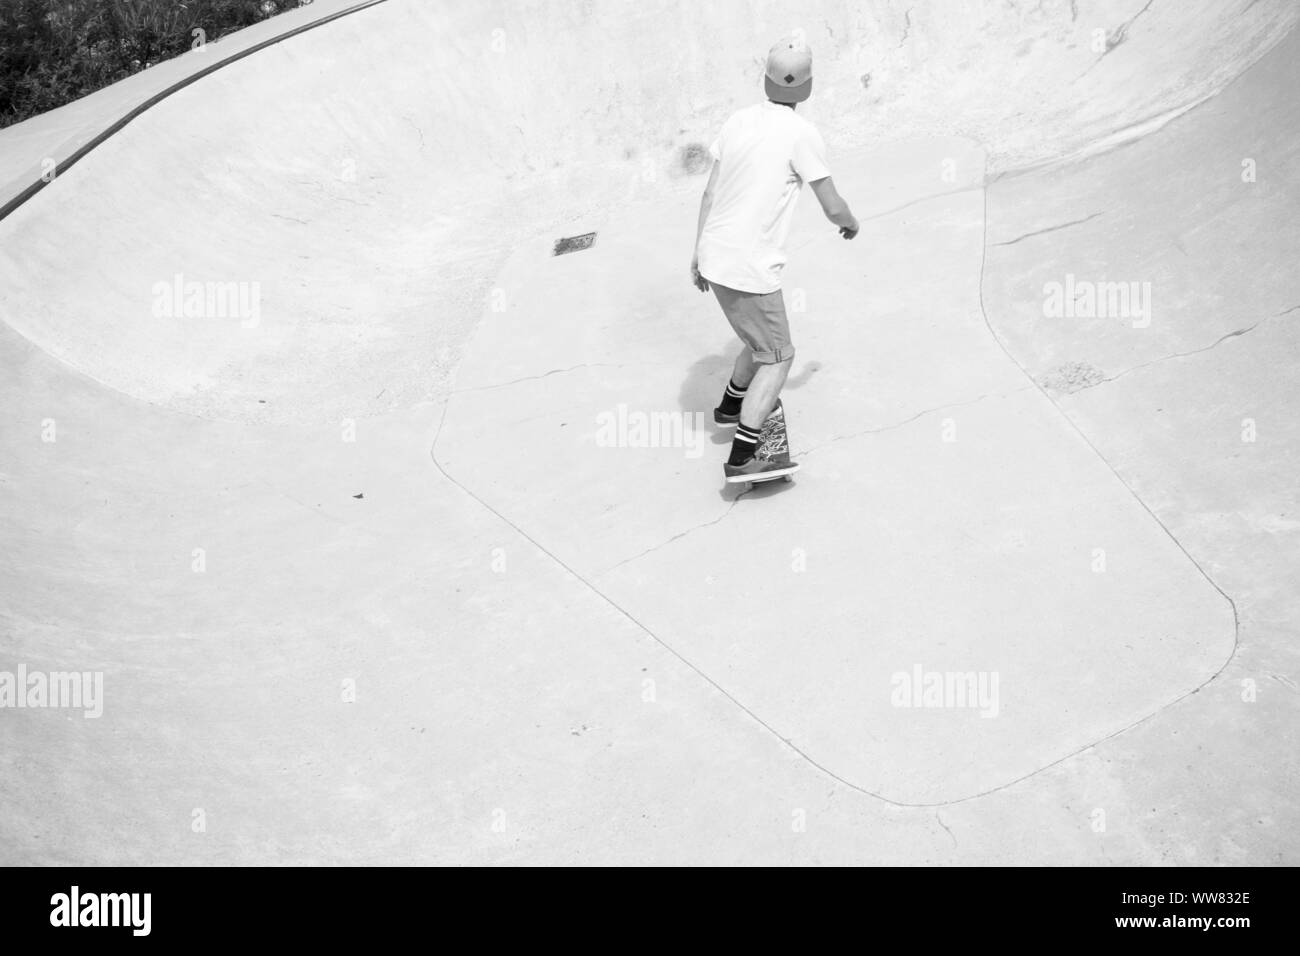 Skatepark Black and White Stock Photos & Images - Alamy